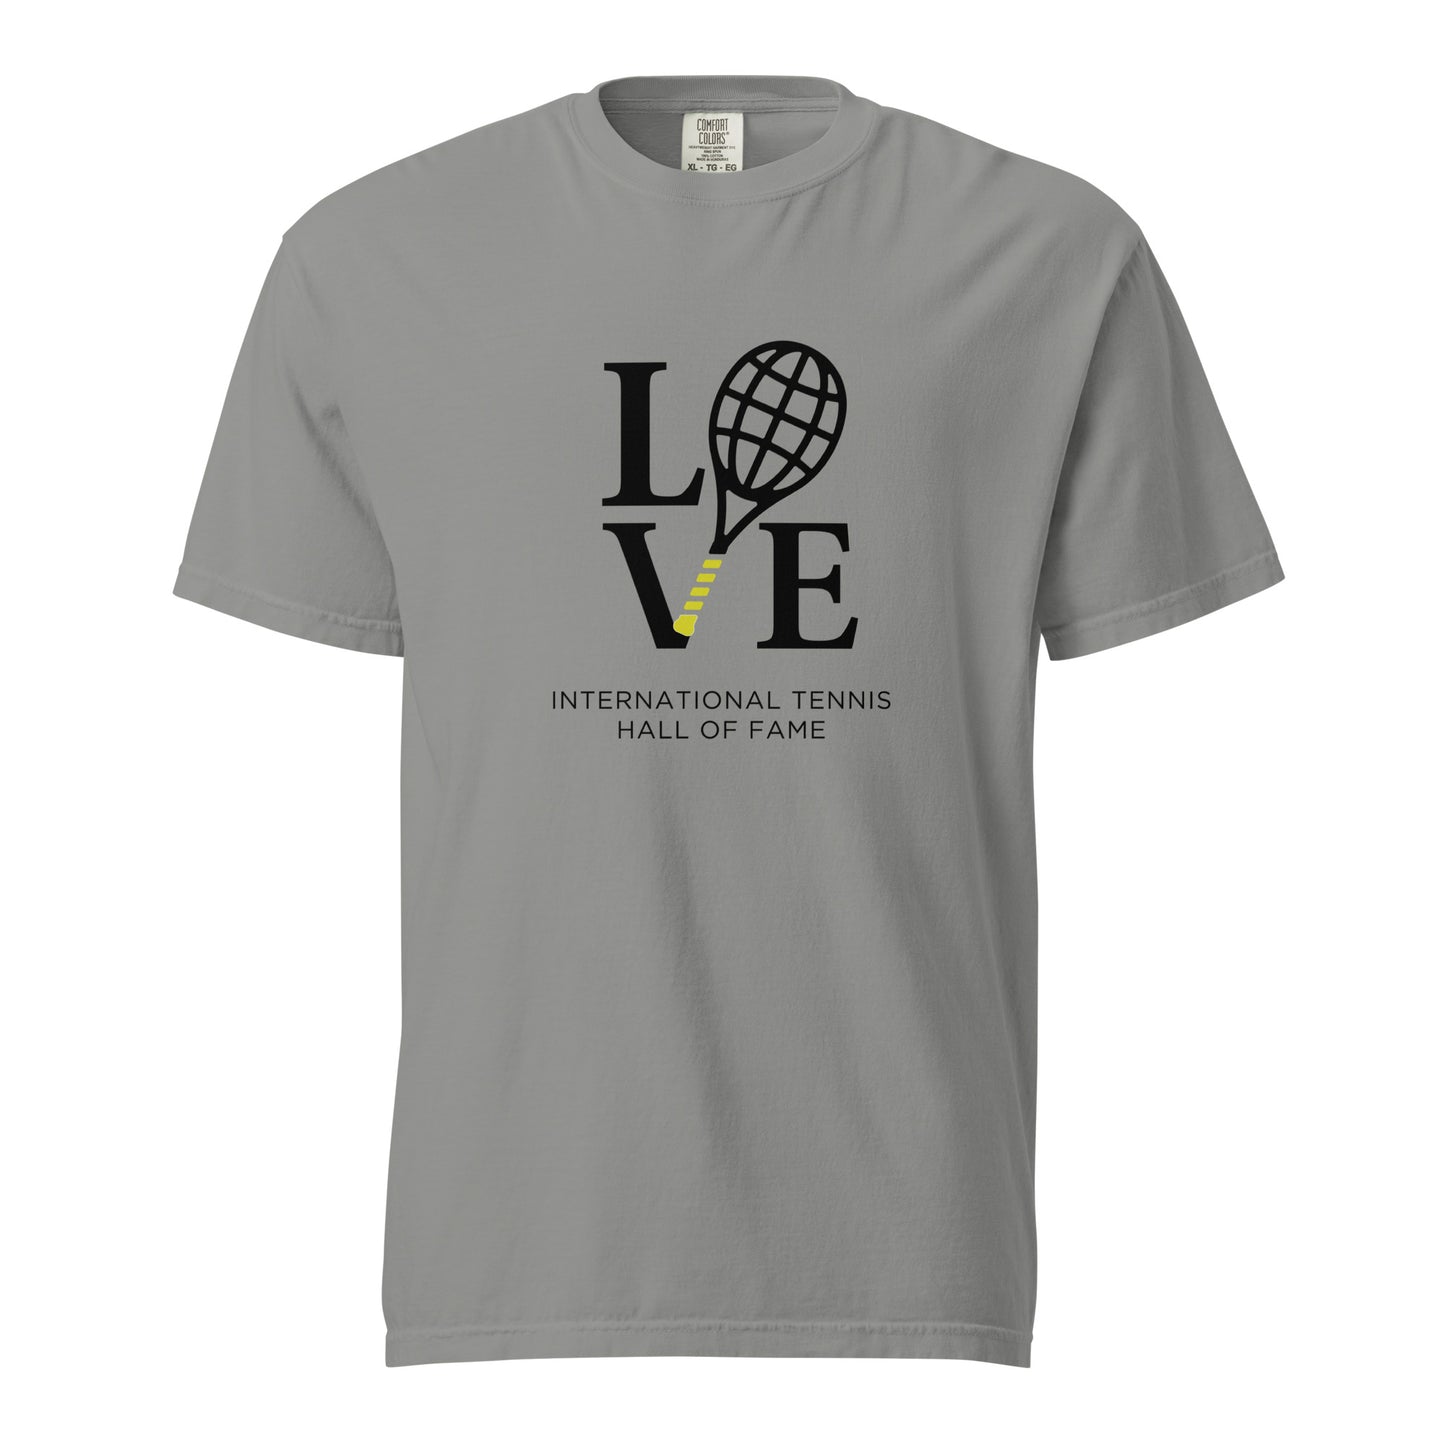 ITHF Love t-shirt